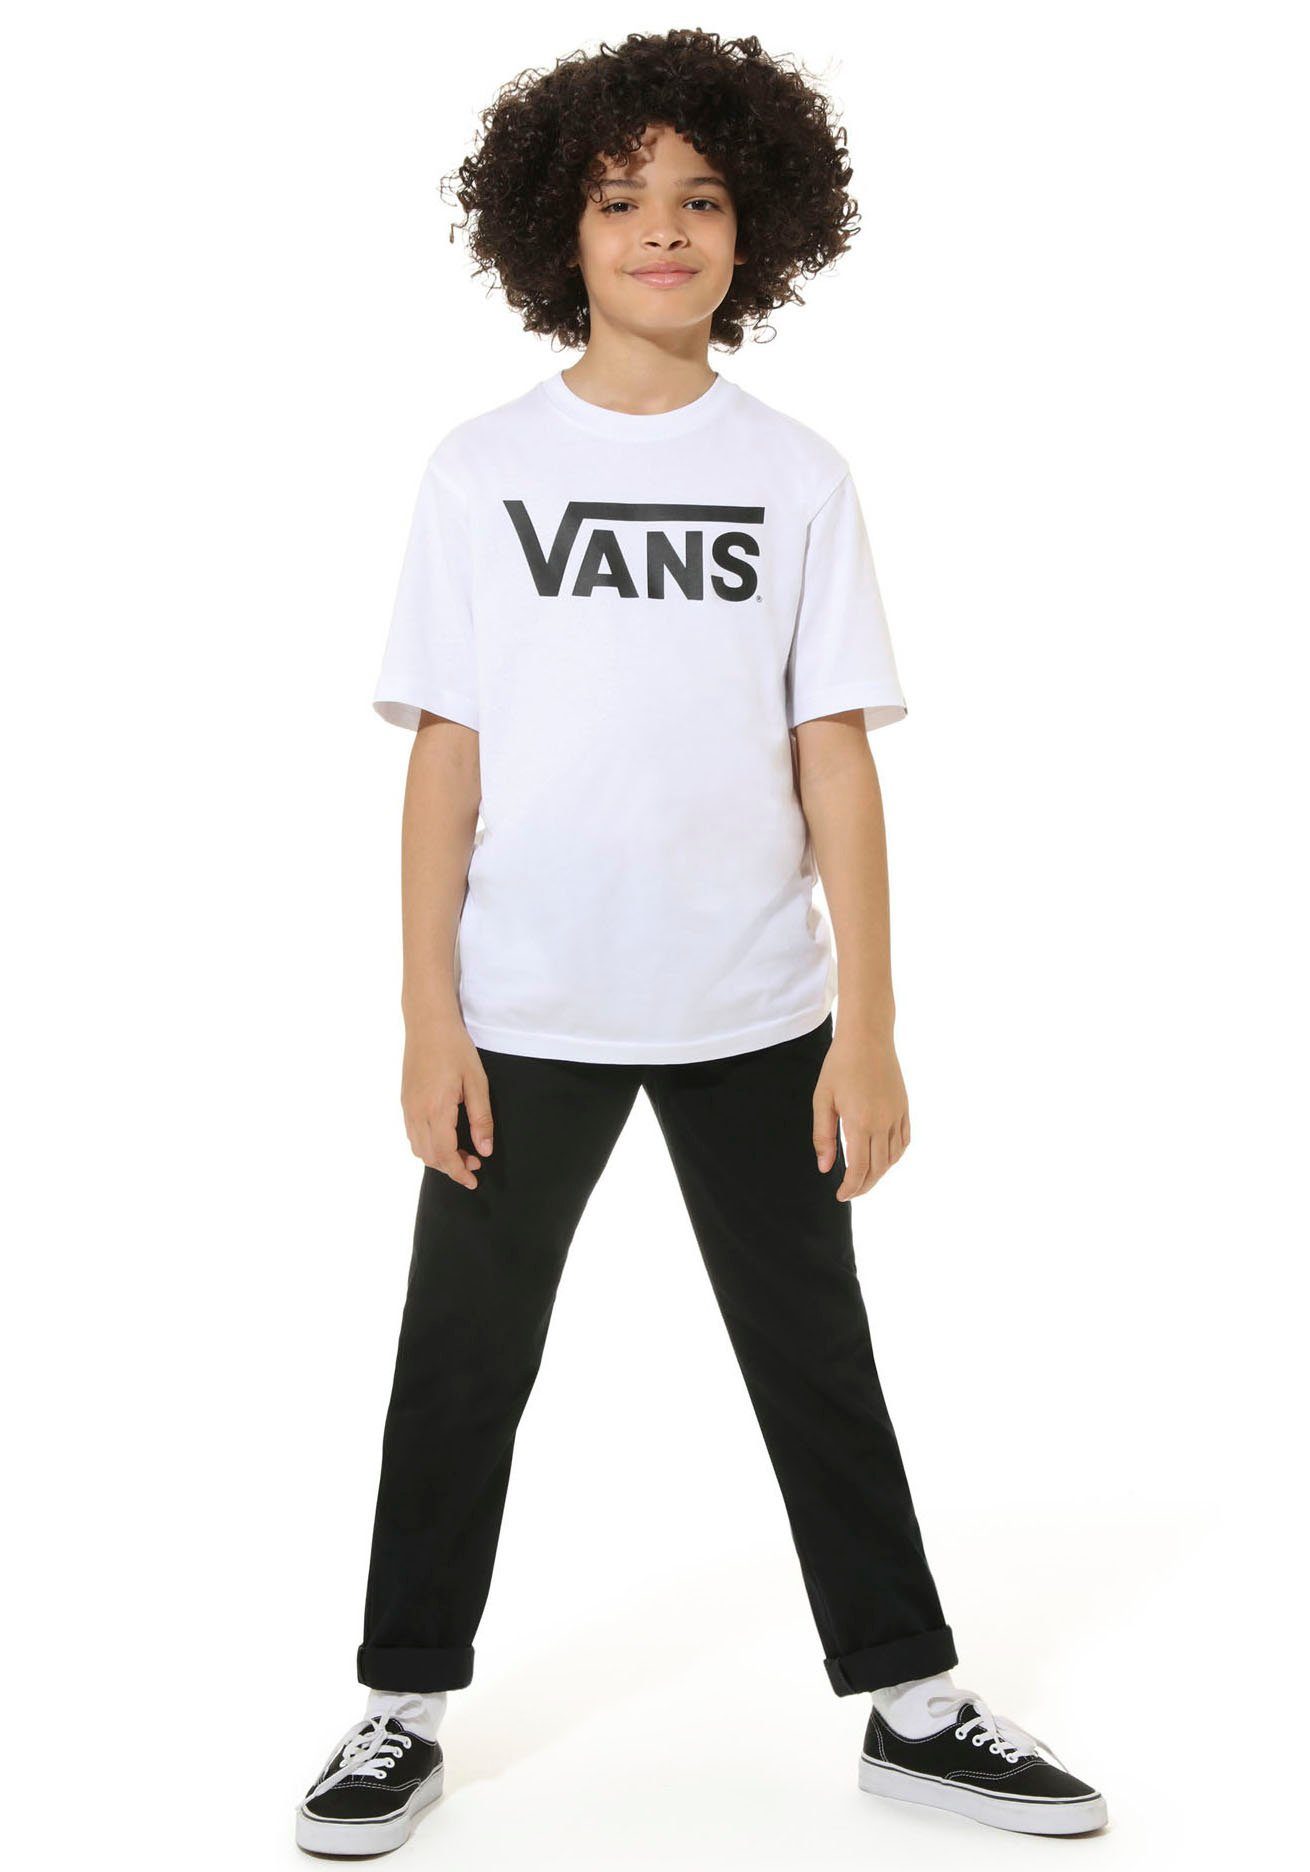 CLASSIC Vans T-Shirt VANS weiß BOYS